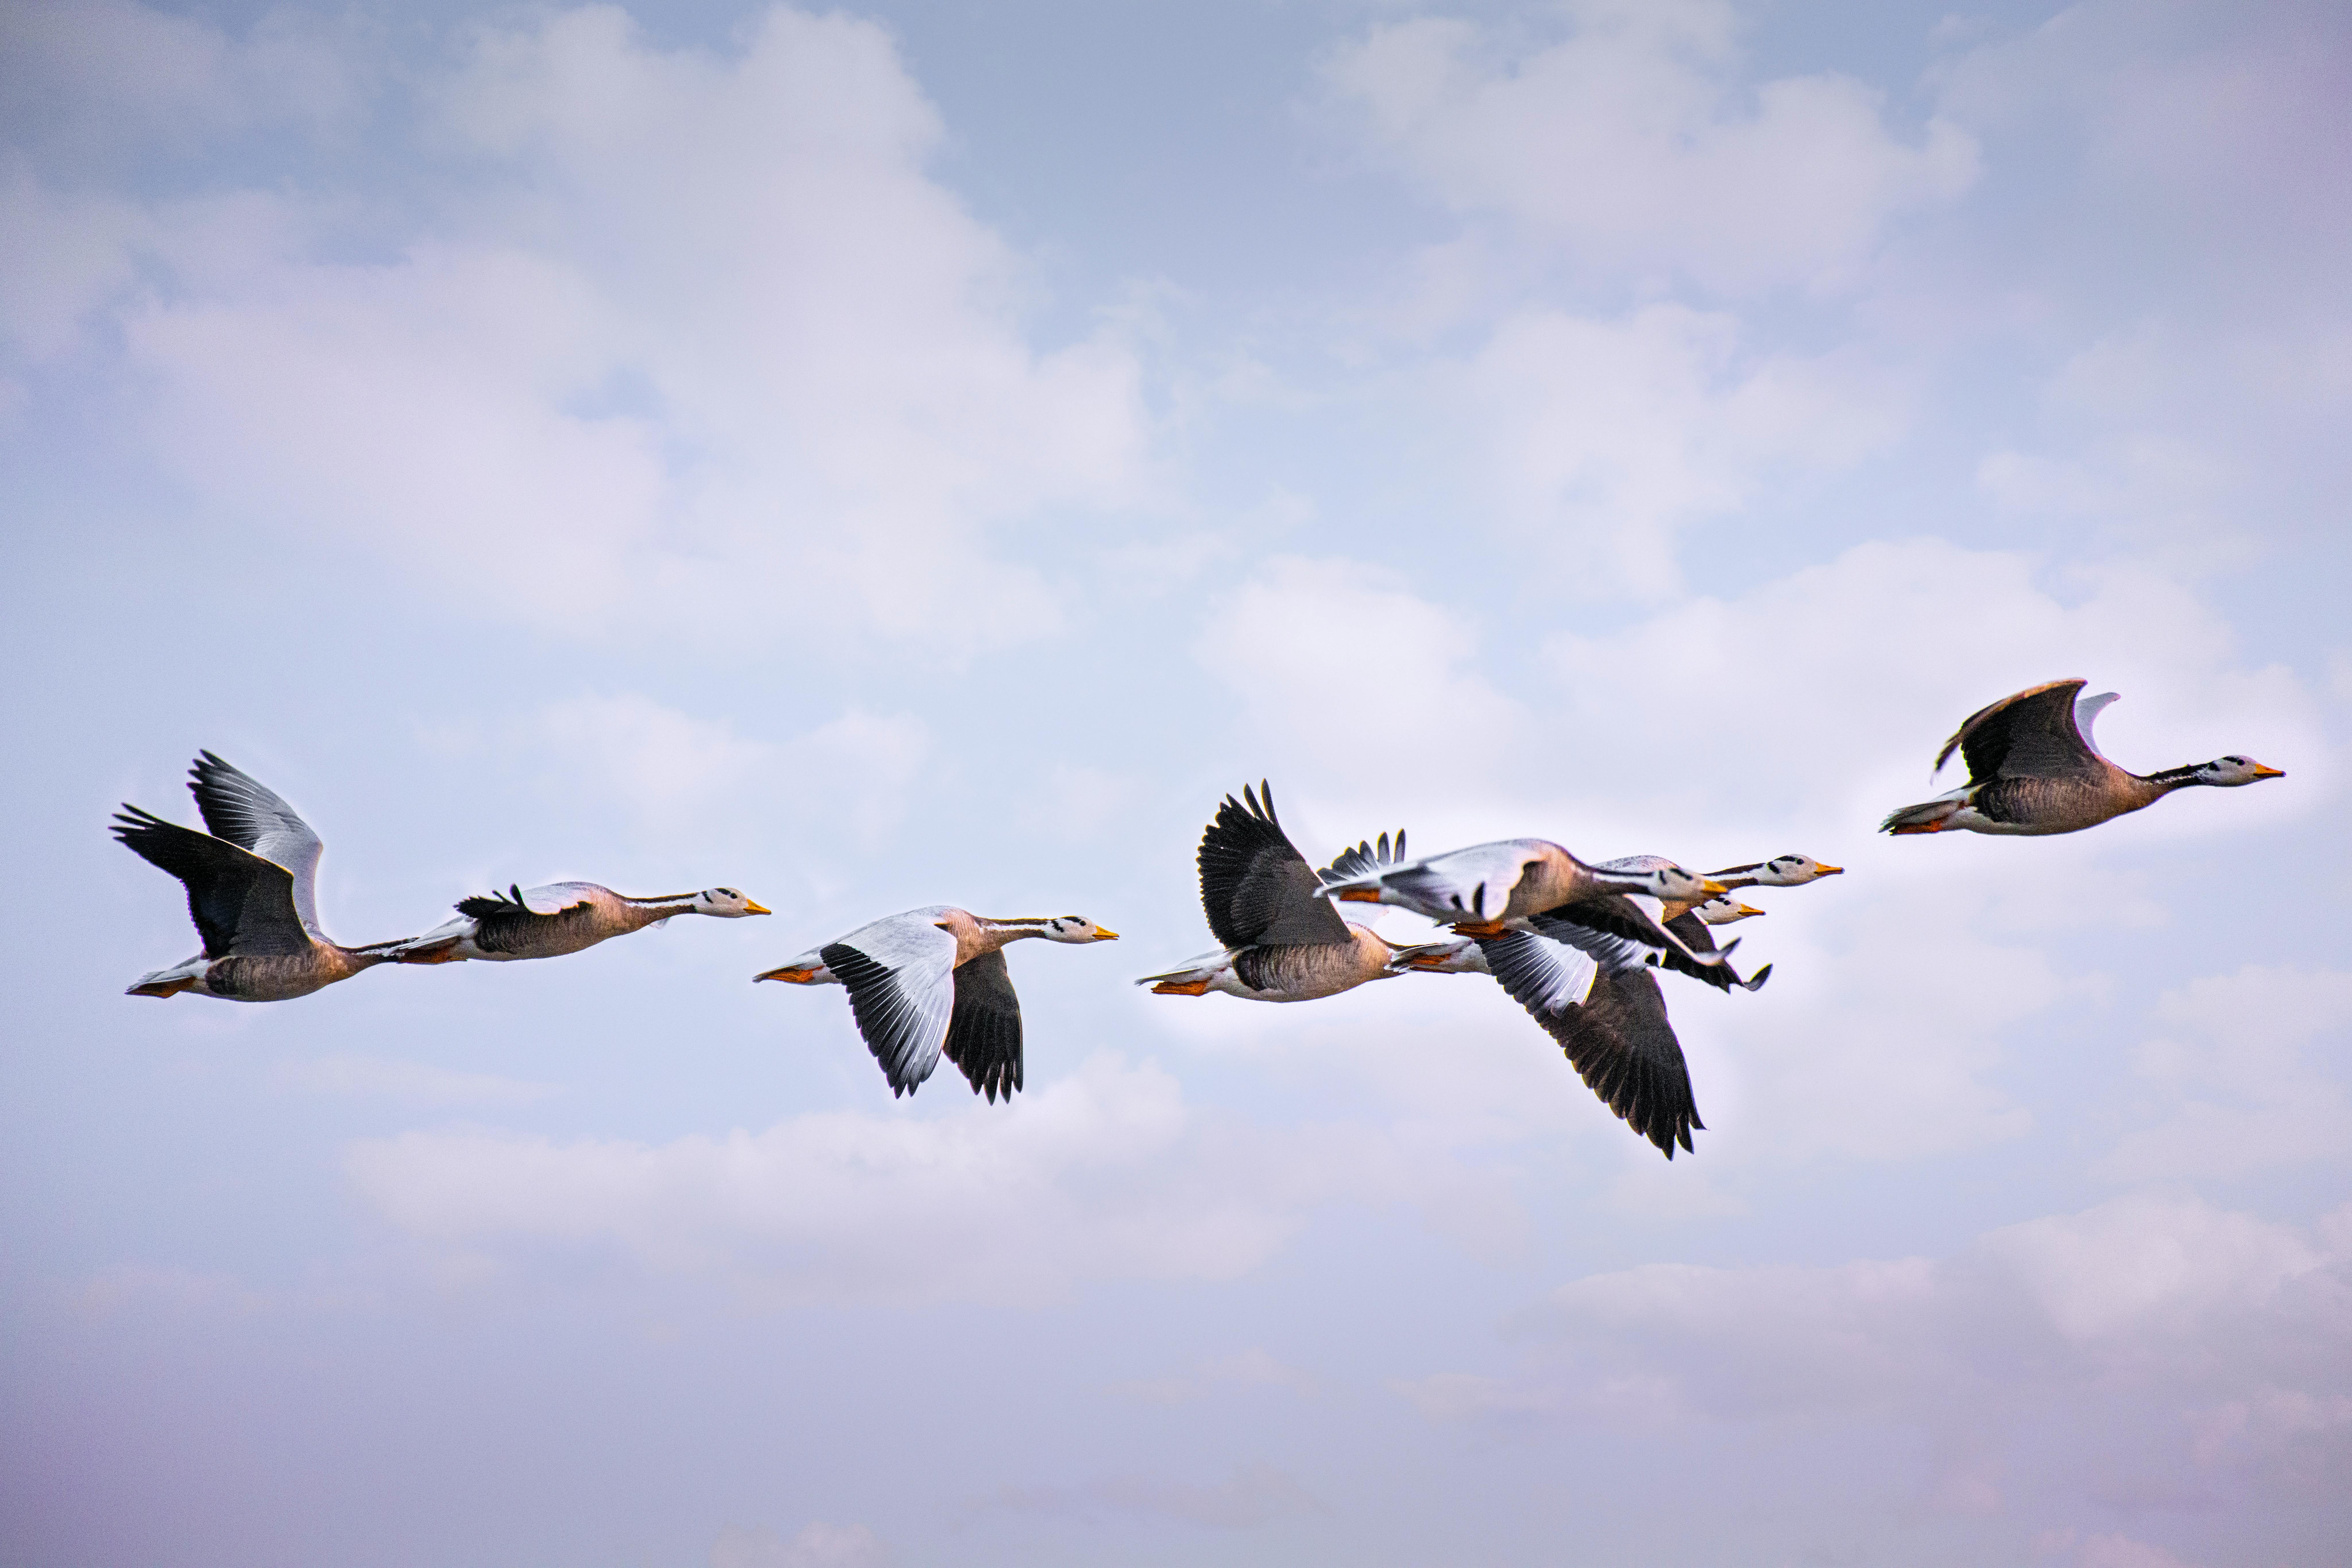 Crane fly habitat with flock of birds flying over cloudy sky